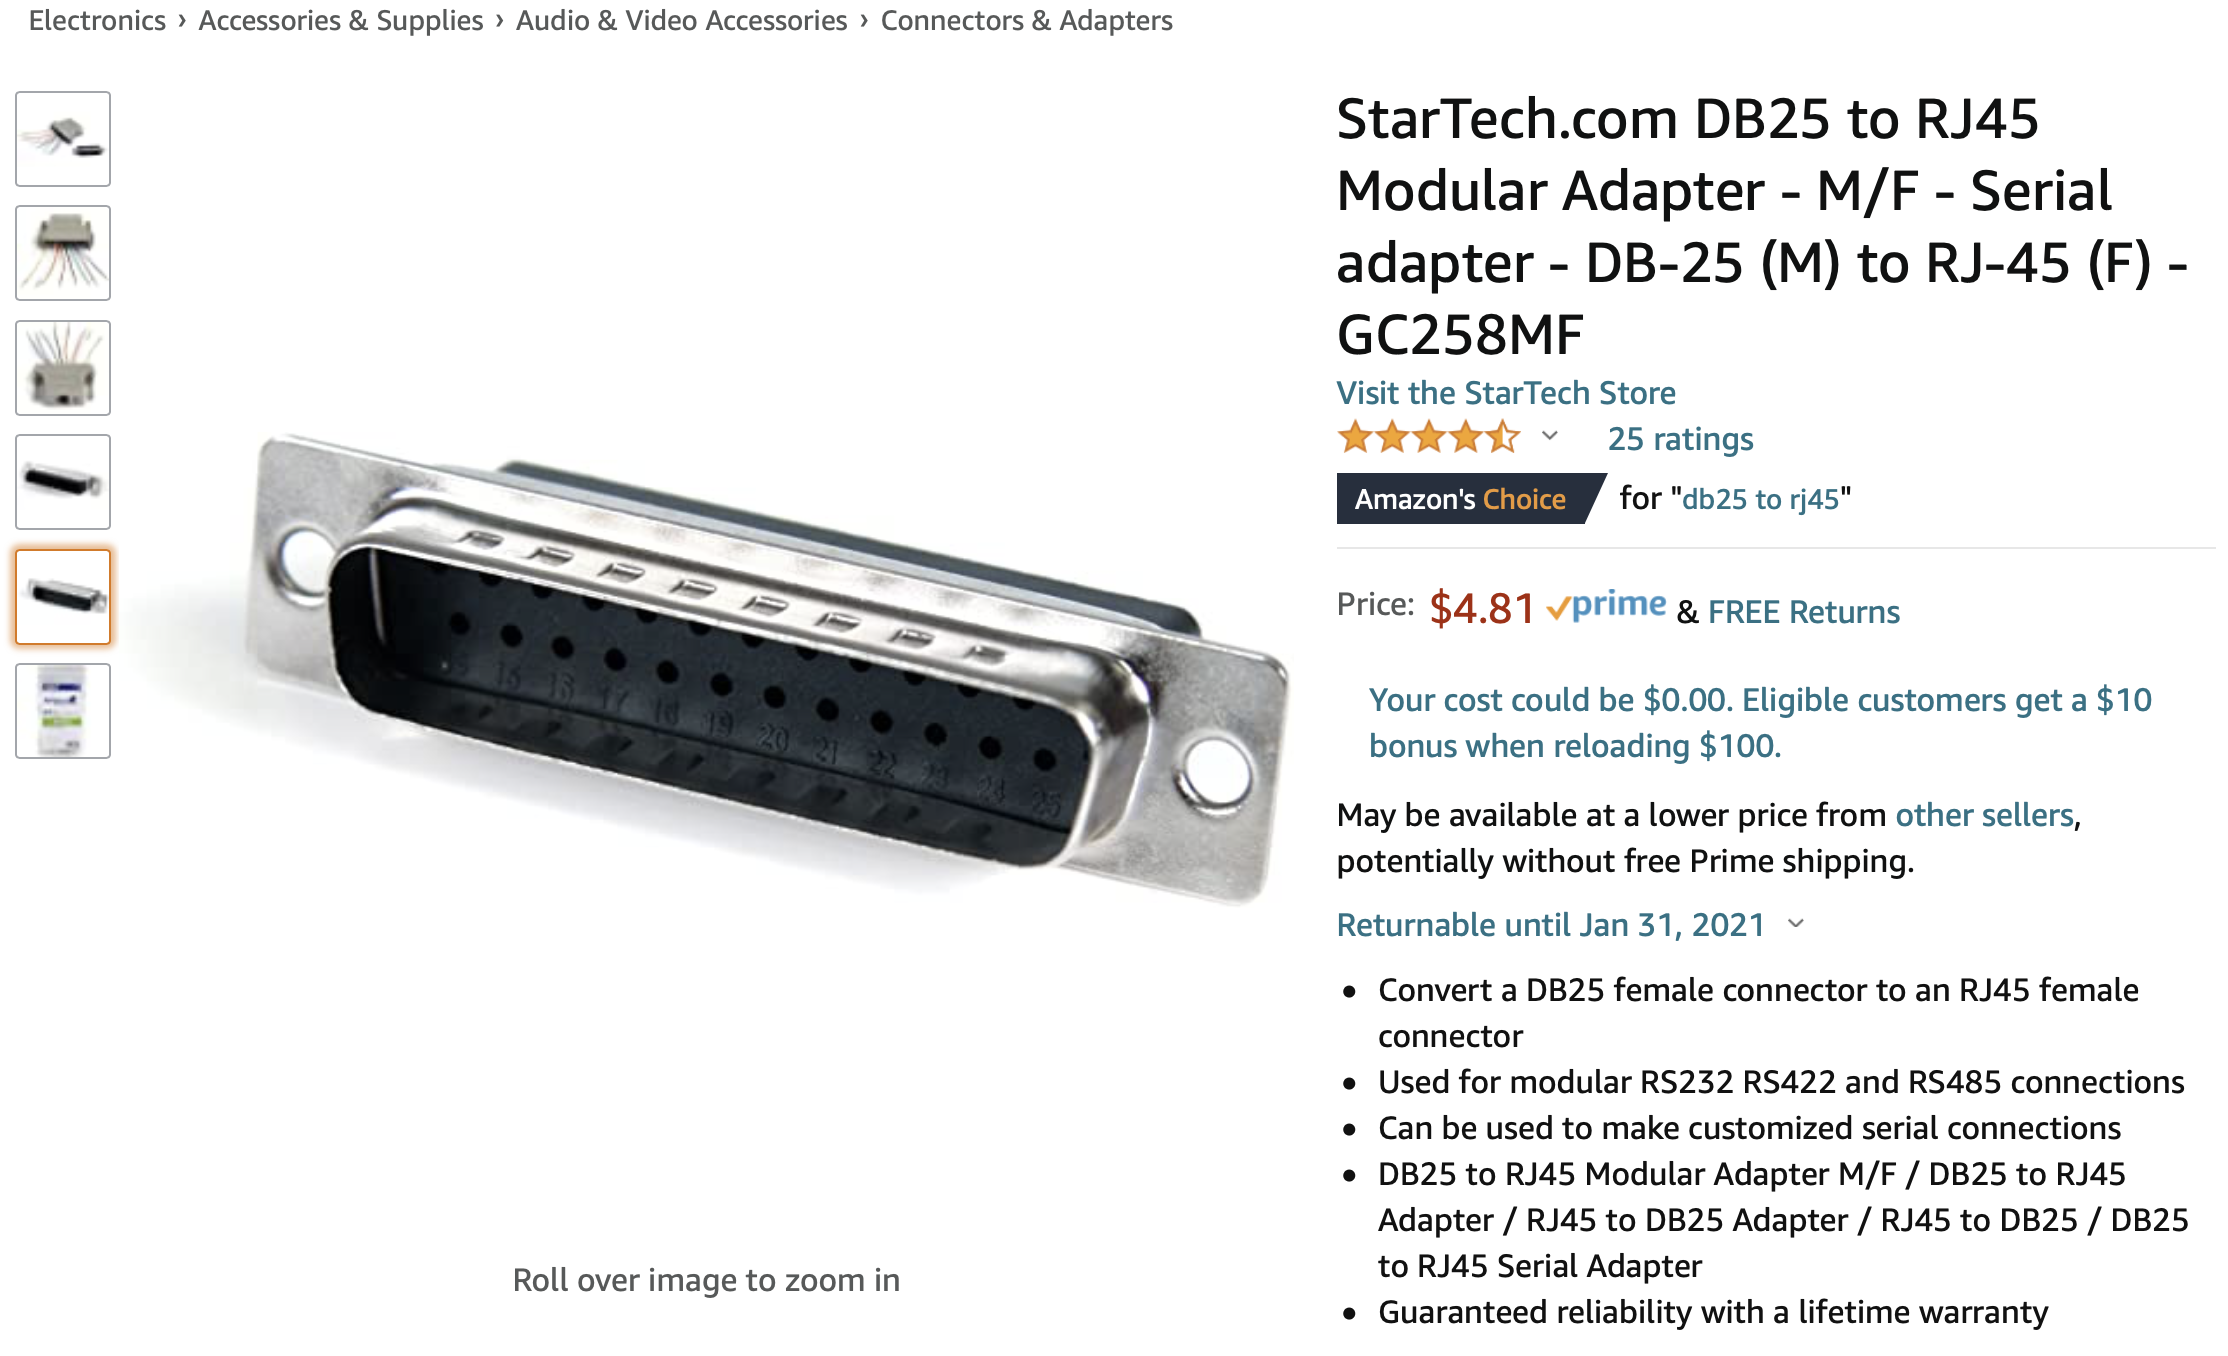 StarTech.com DB25 to RJ45 adapter on Amazon